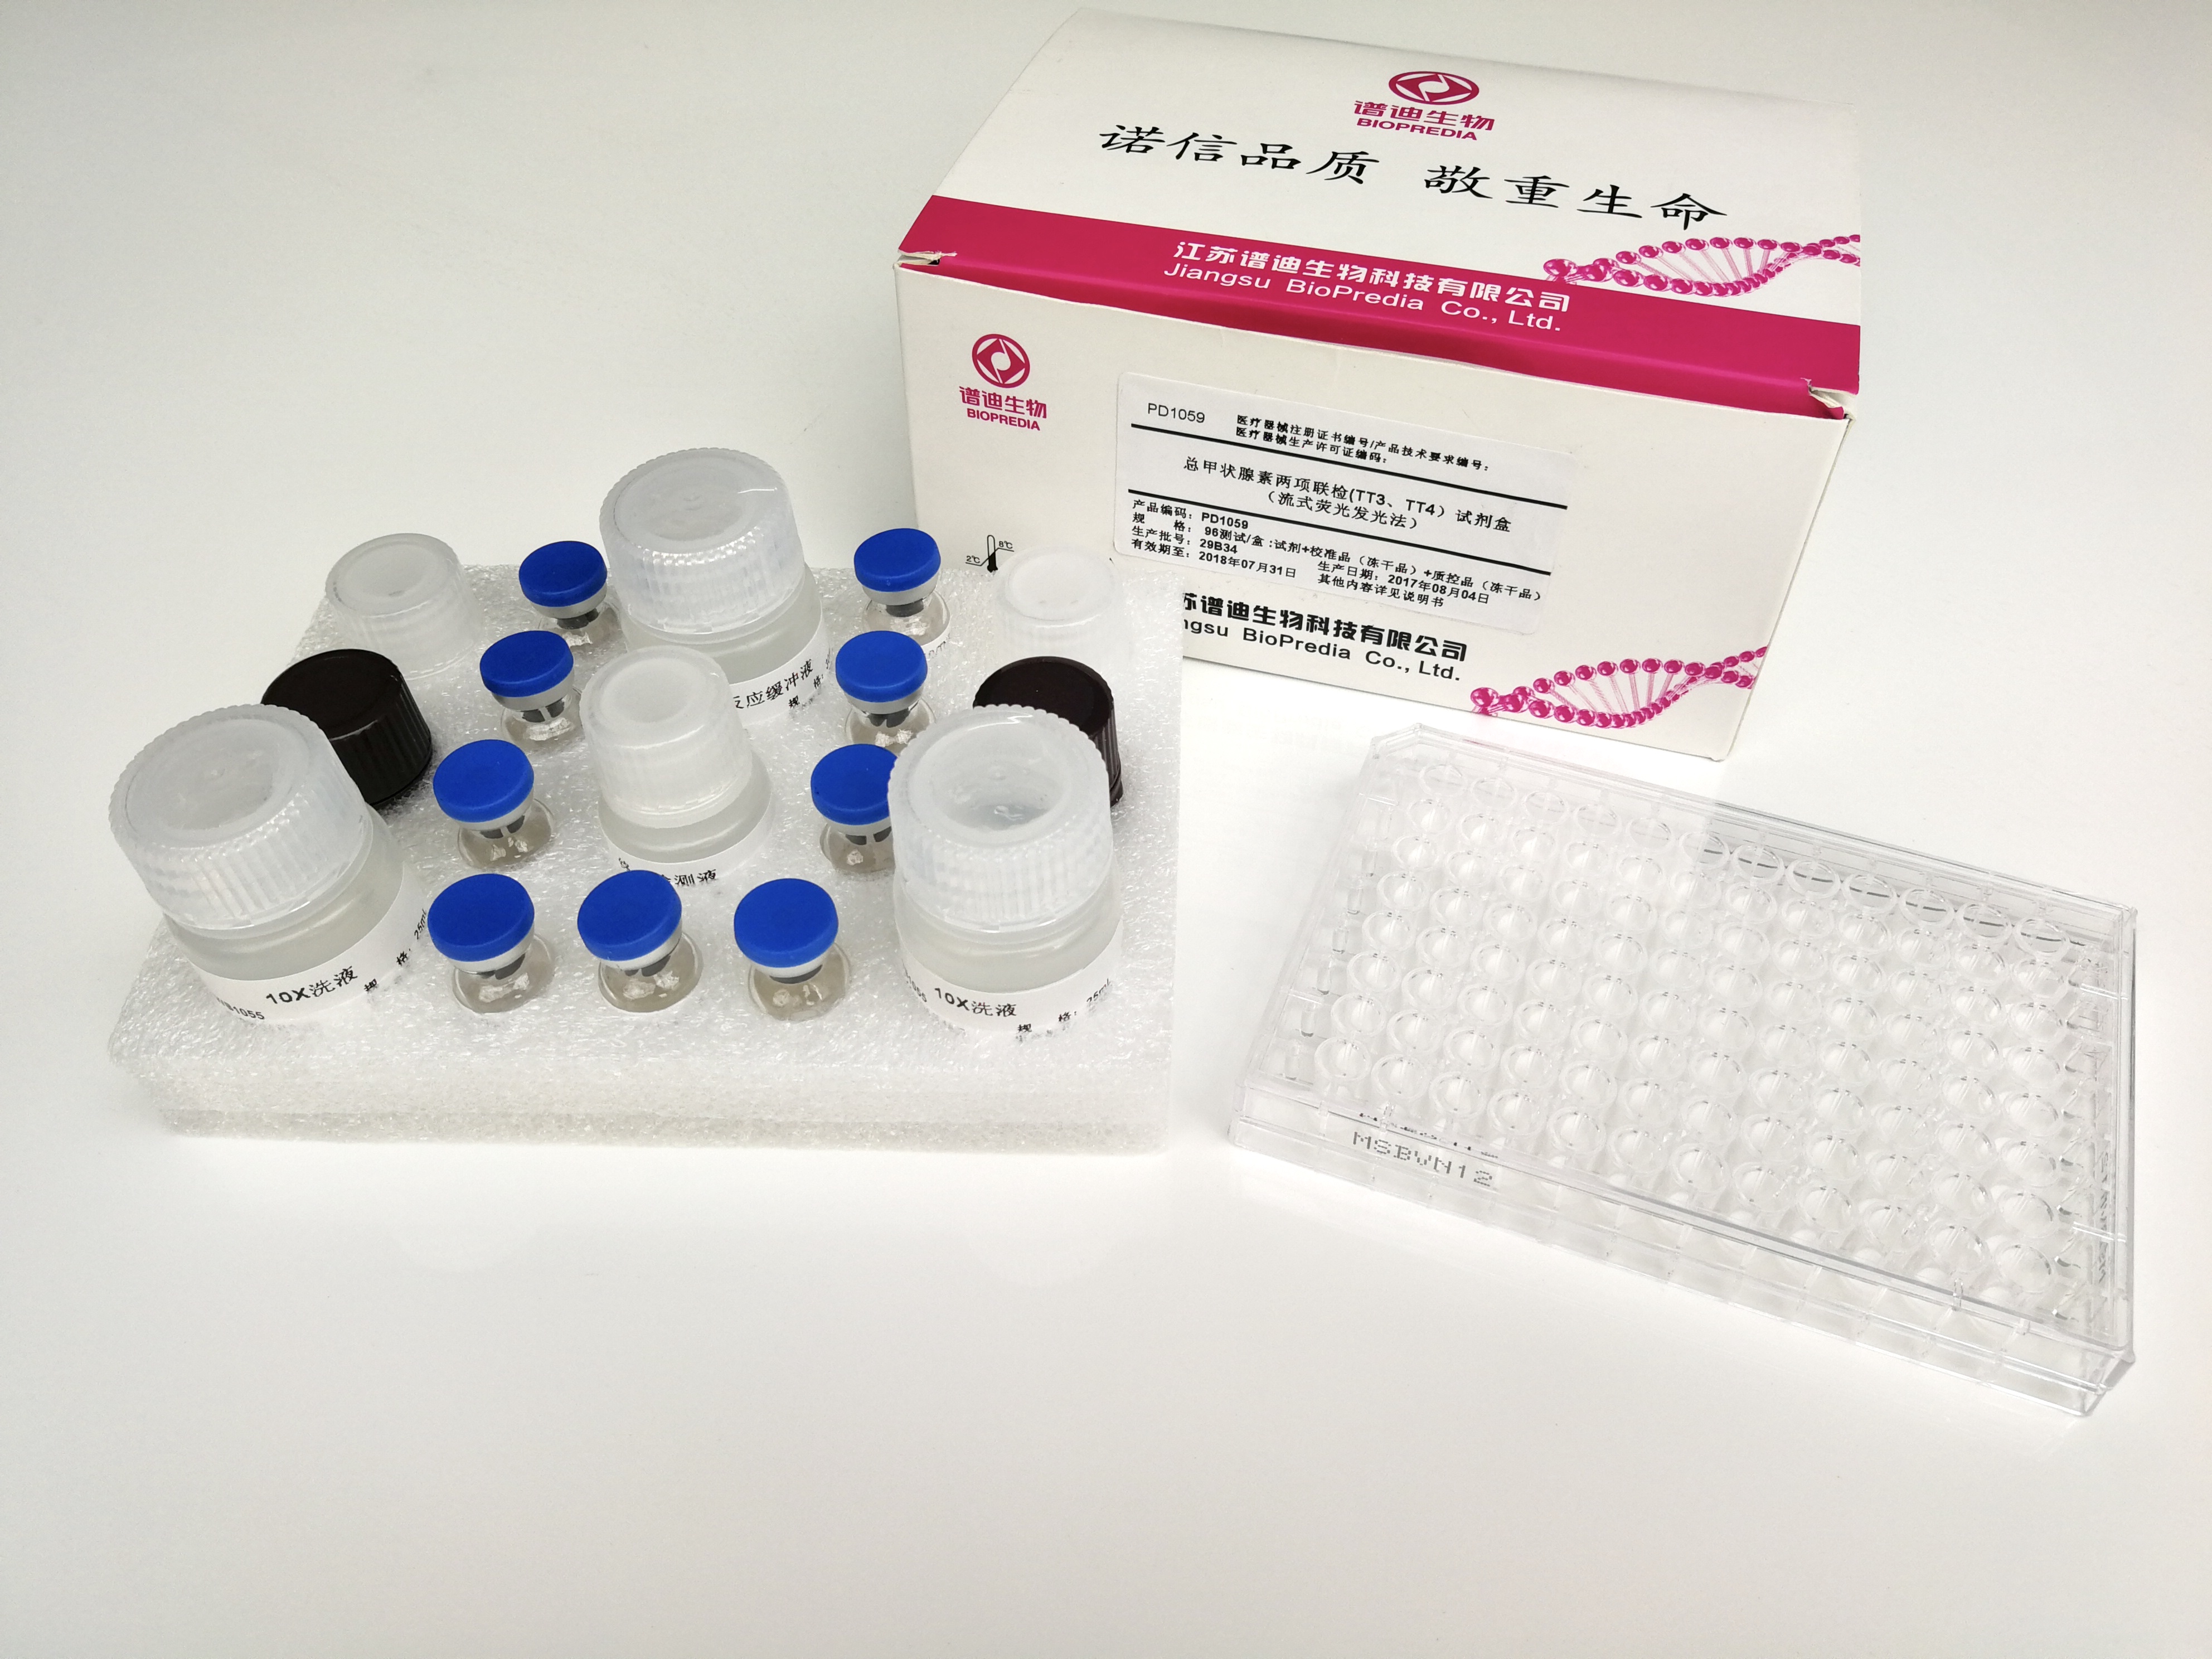 【BIOPREDIA】总甲状腺素两项联检试剂盒（流式荧光发光法）-云医购